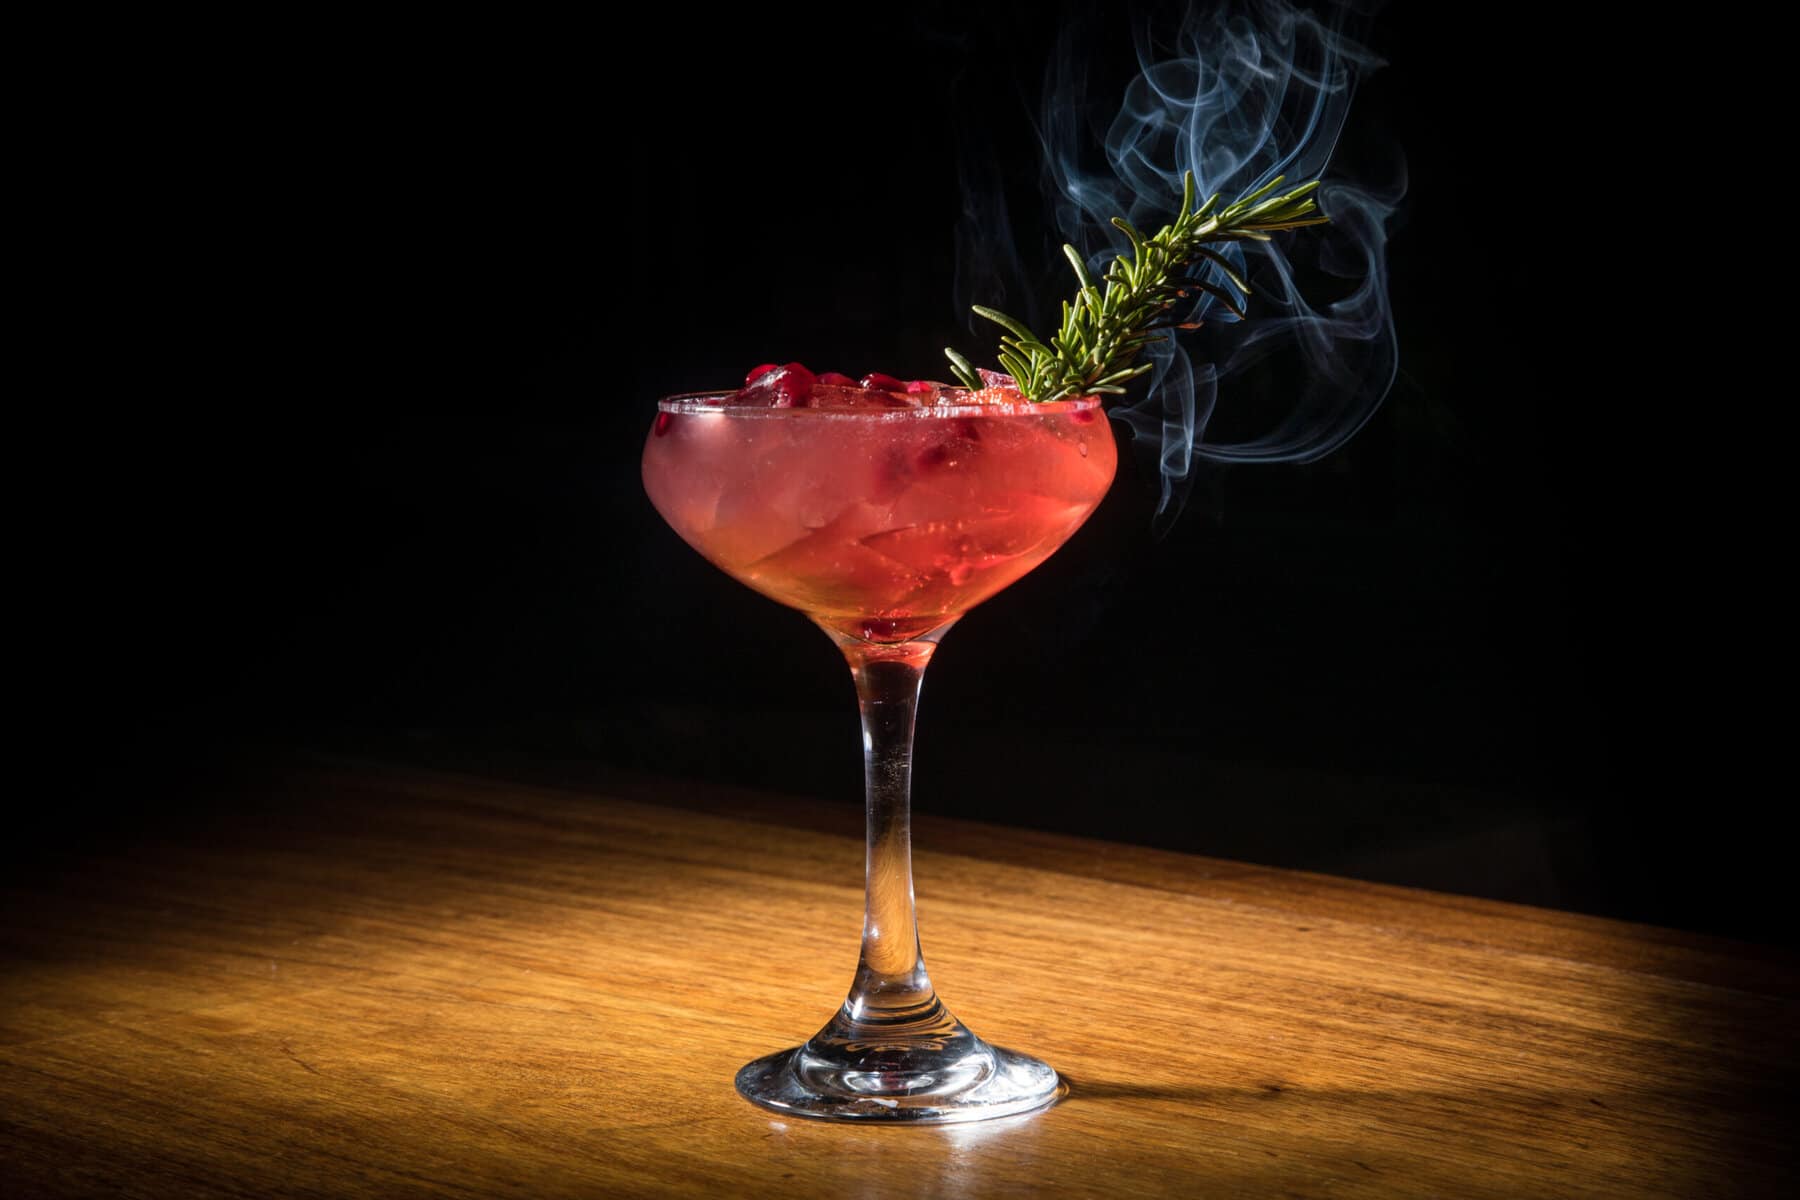 cocktail with smoking rosemary sprig